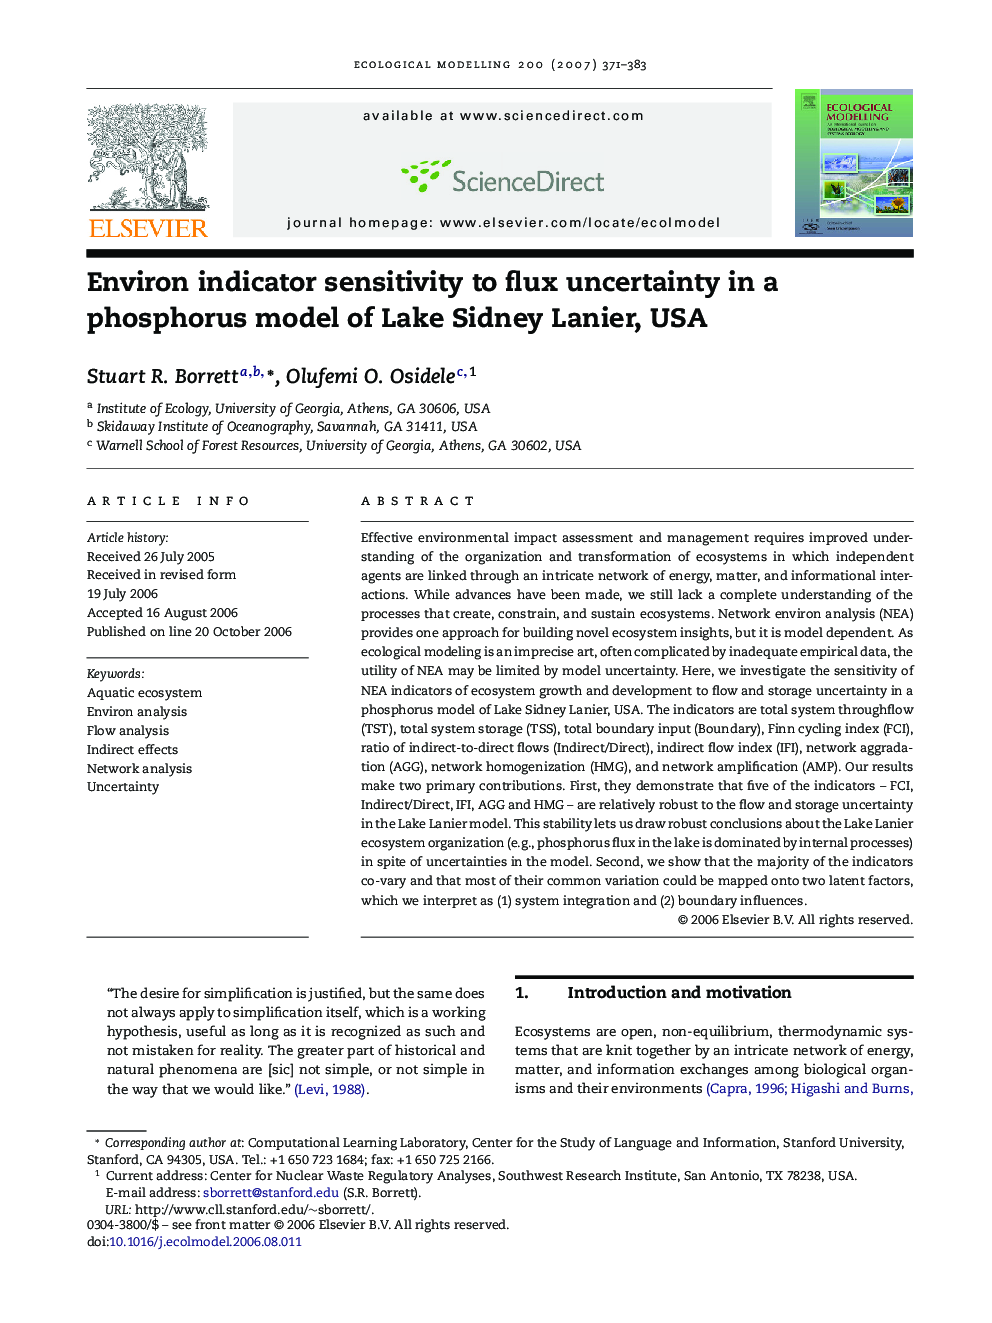 Environ indicator sensitivity to flux uncertainty in a phosphorus model of Lake Sidney Lanier, USA